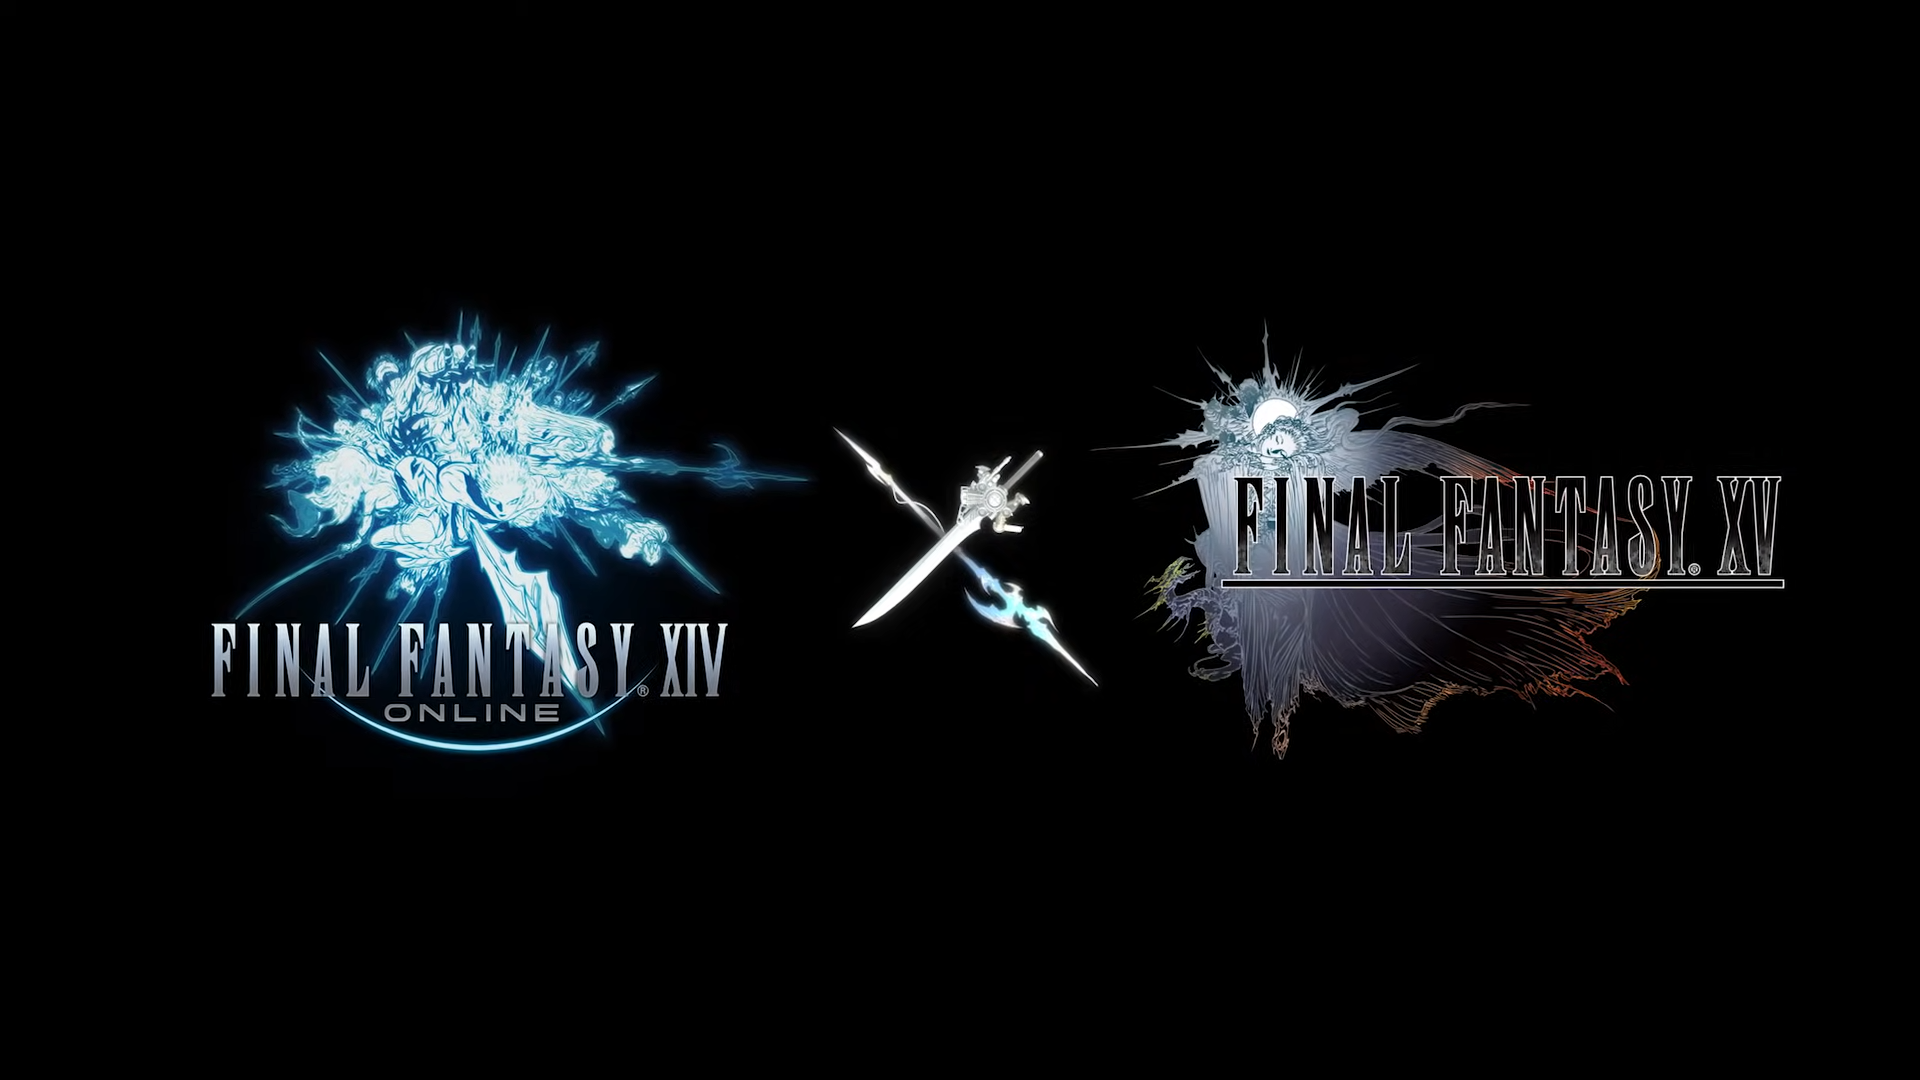 FINAL FANTASY XV x FINAL FANTASY XIV Online – Collaboration Launch Trailer  